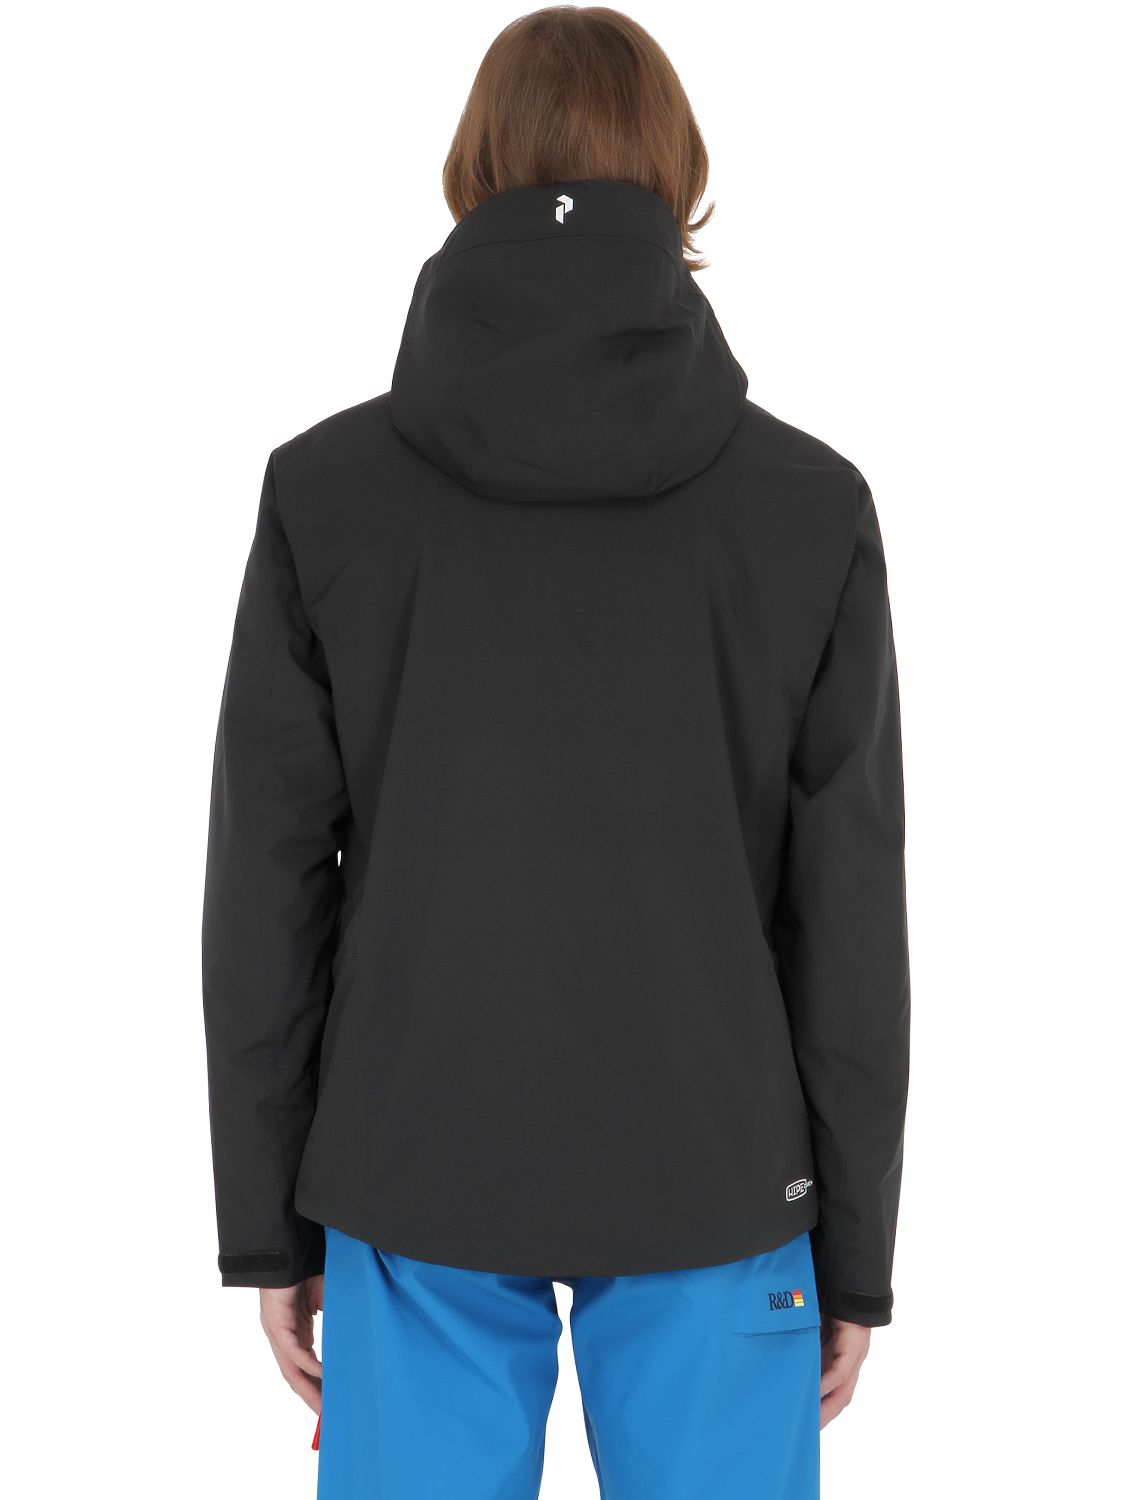 Peak Performance Maroon J Insulated Ski Jacket in Black for Men - Lyst